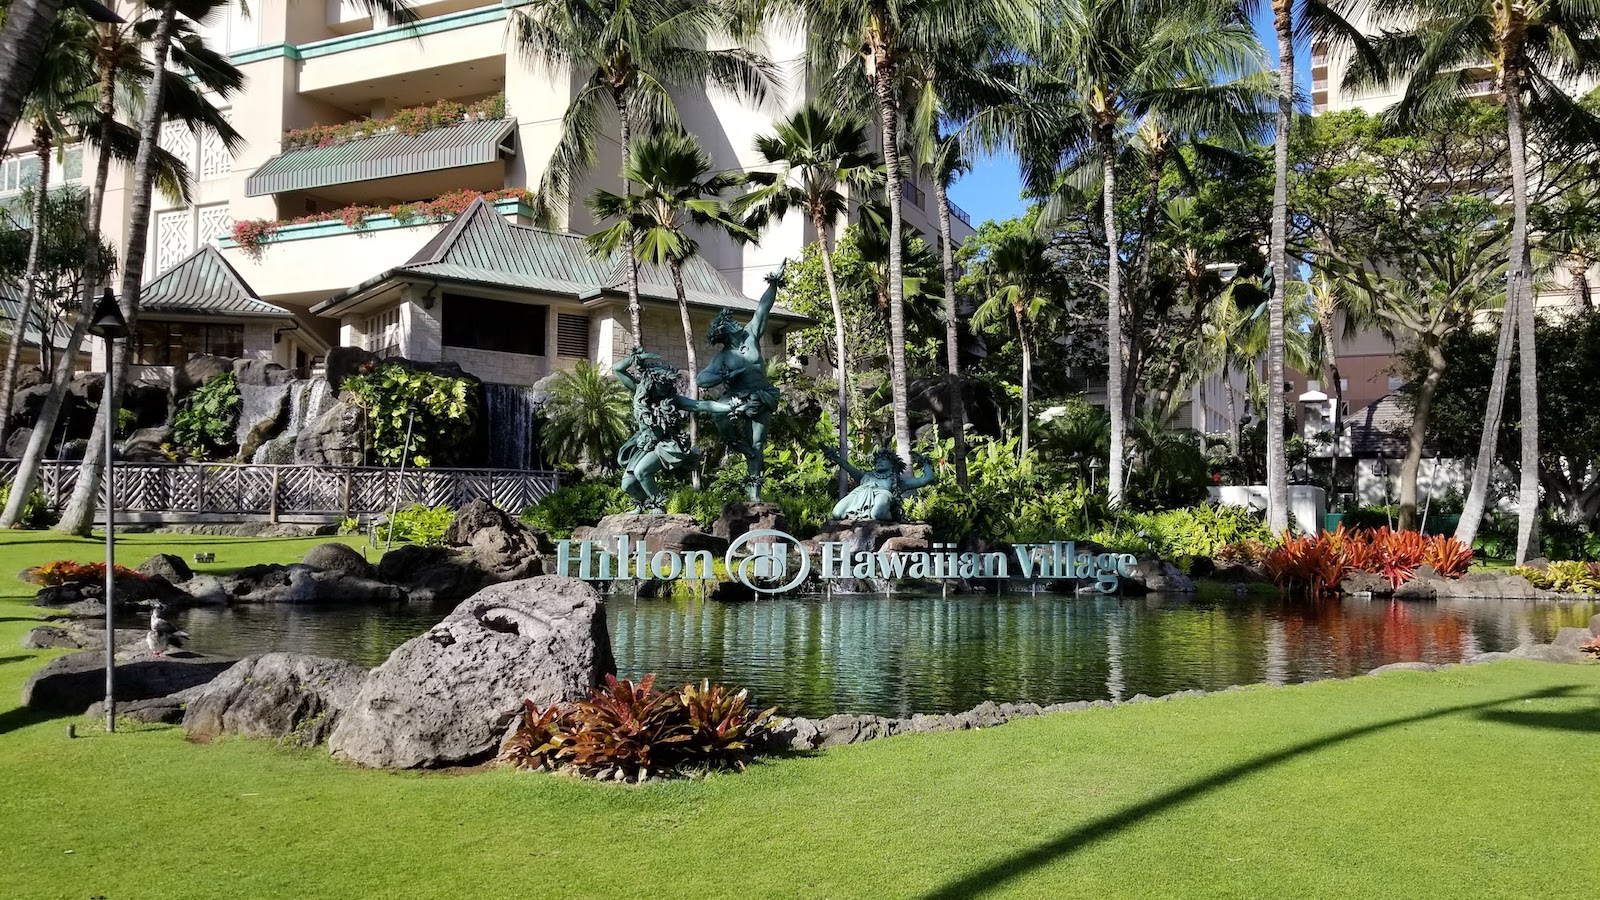 Hilton Hawaiian Village A Tropical Paradise for Your Next HGV Vacation